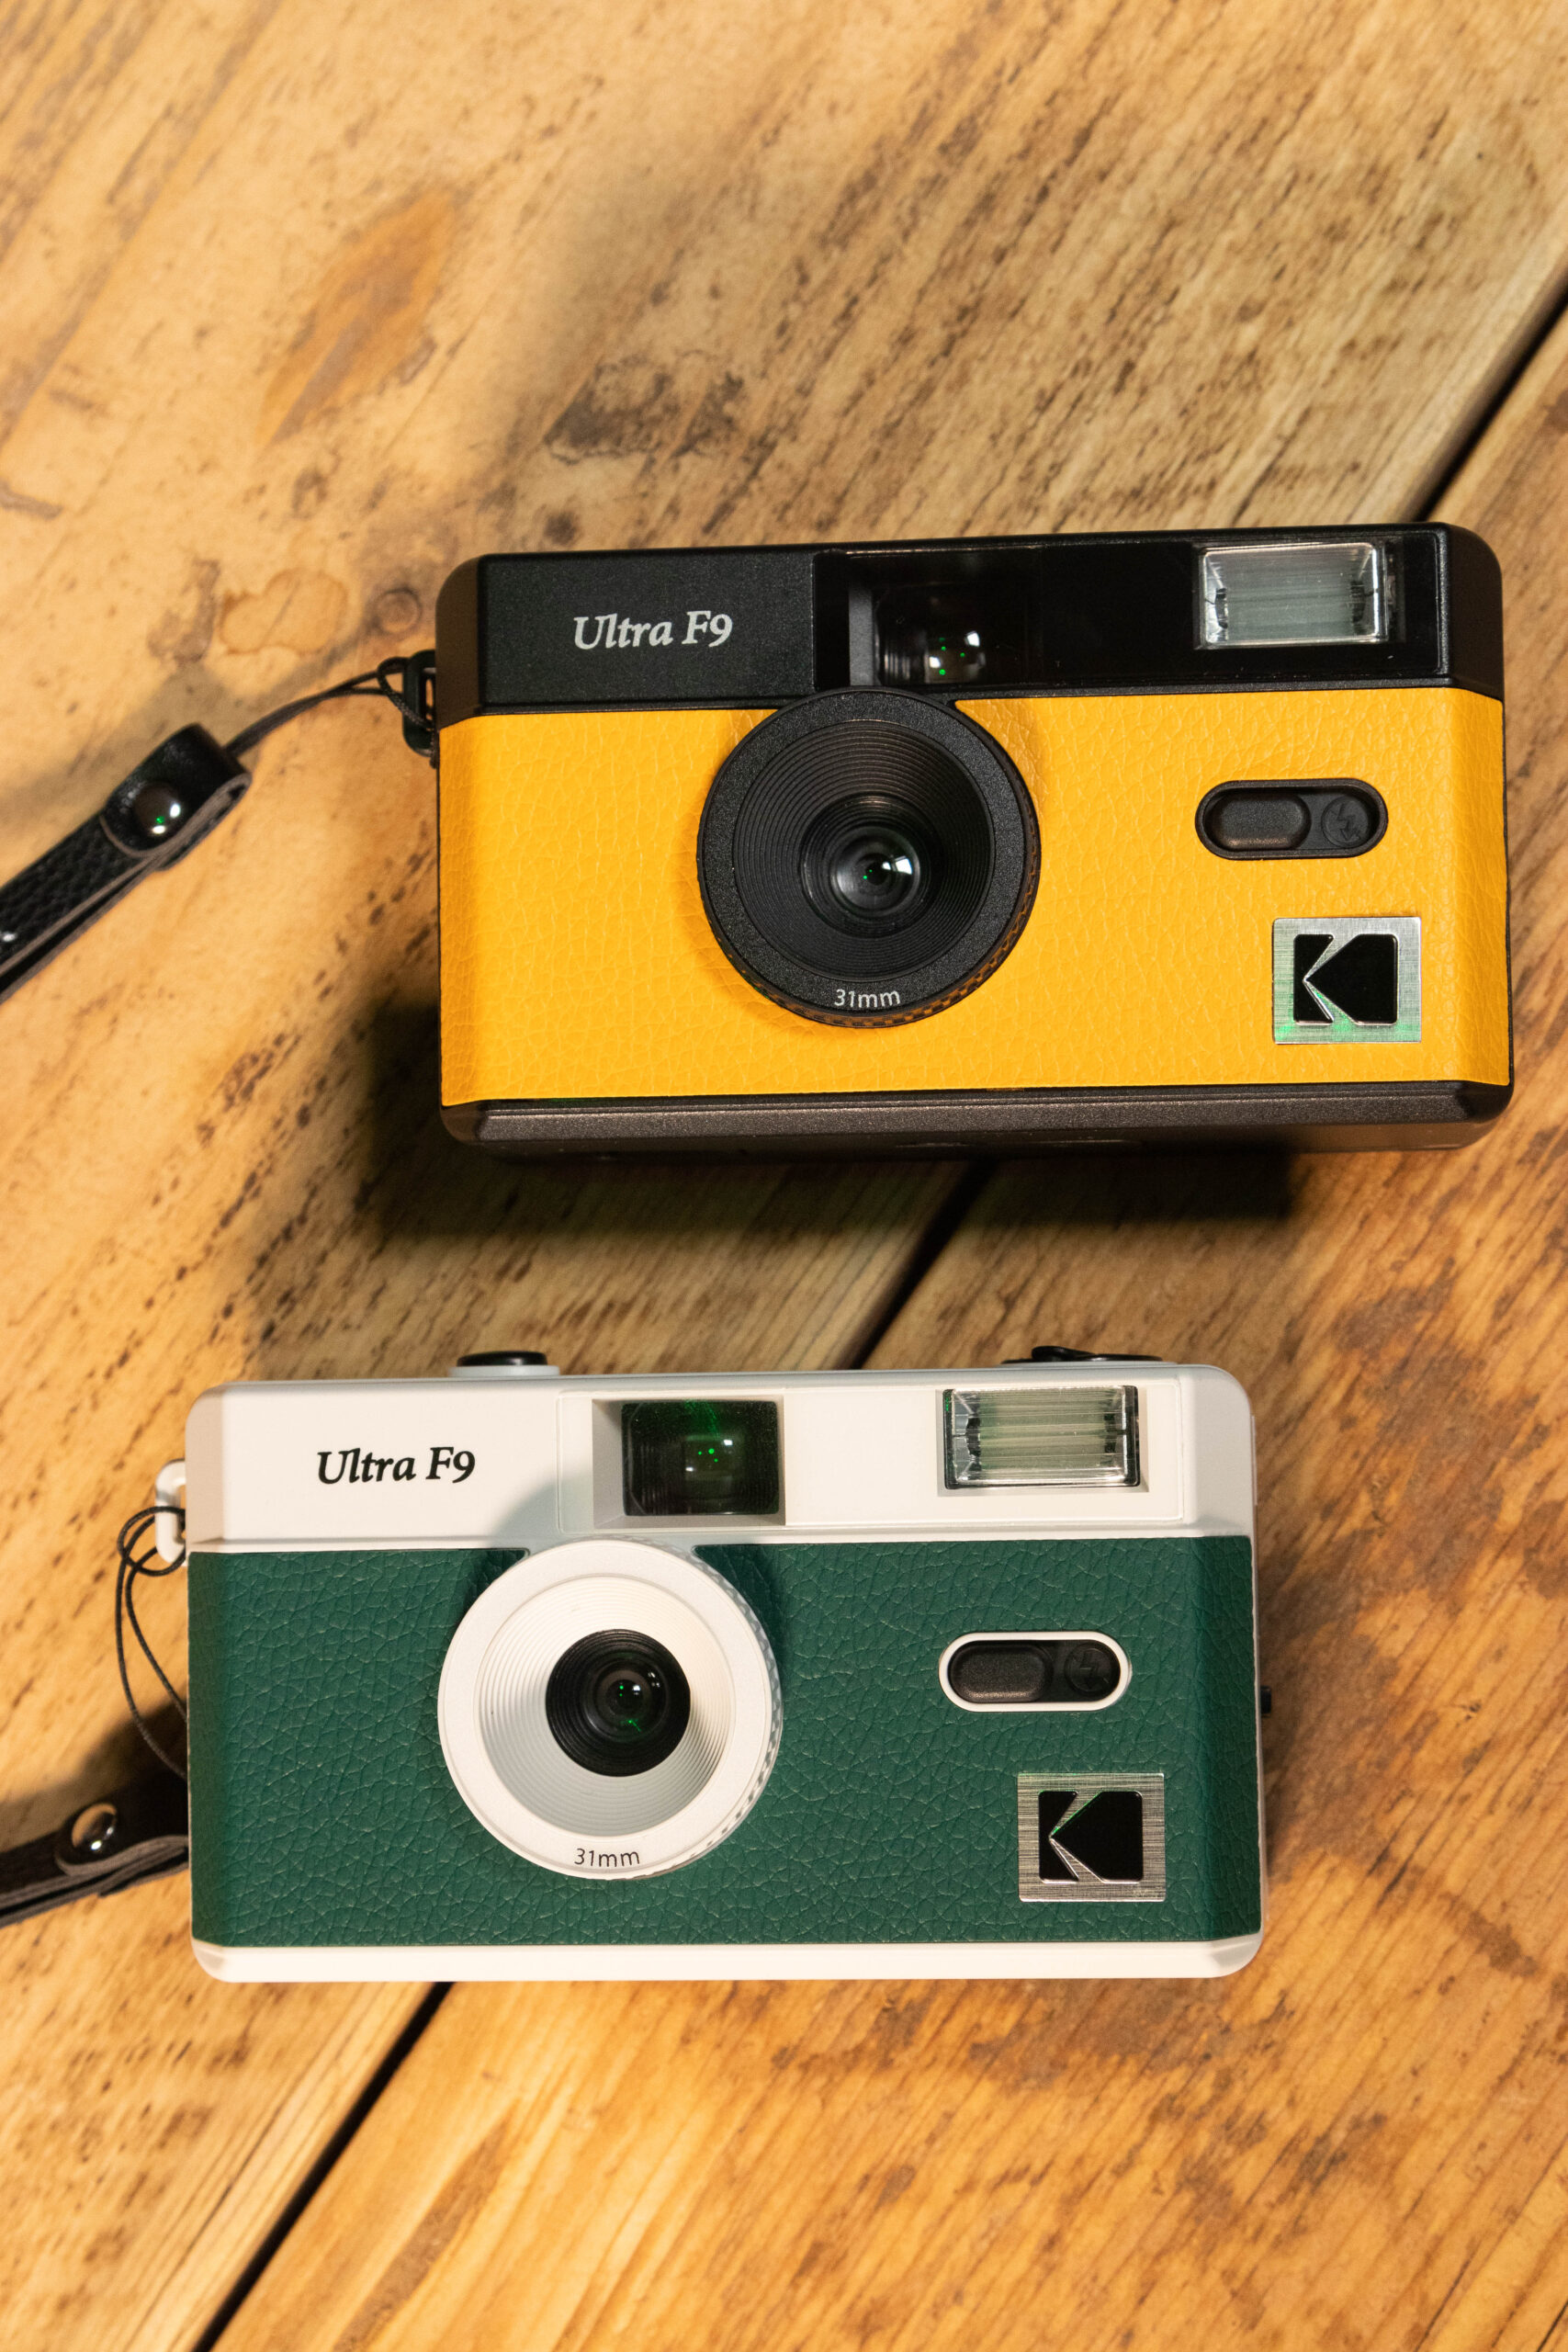 Kodak Ultra F9 35mm Film Camera Camera - Retro Style, Focus Free, Reusable,  Built in Flash, Easy to Use (Dark Night Green)